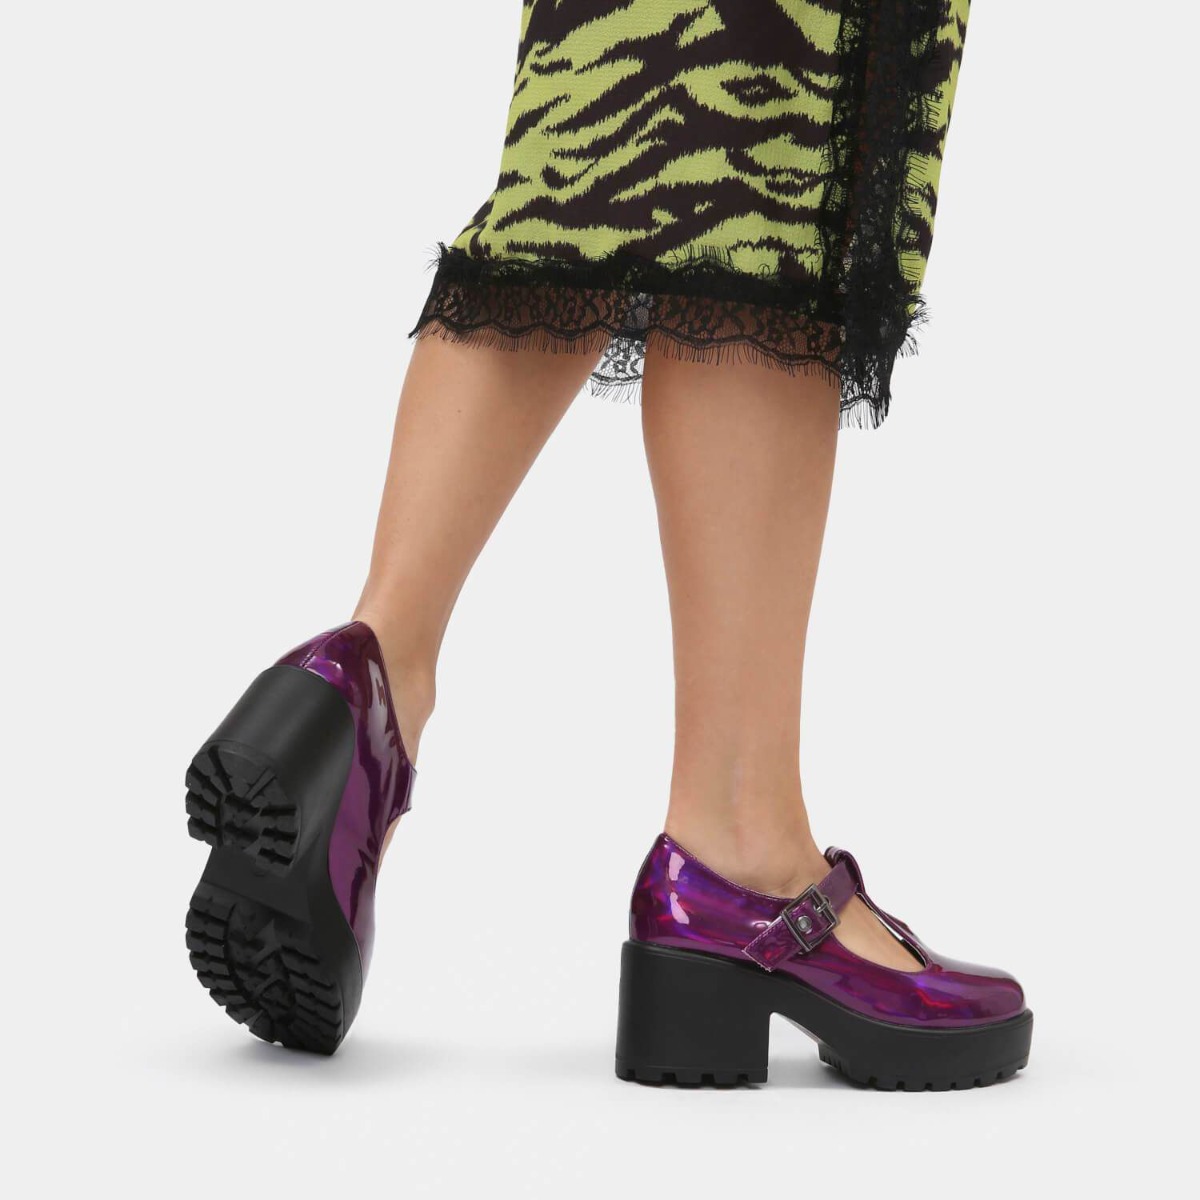 kfnd35purbbbb_chaussures-mary-janes-lolita-glam-rock-sai-violet-metallique